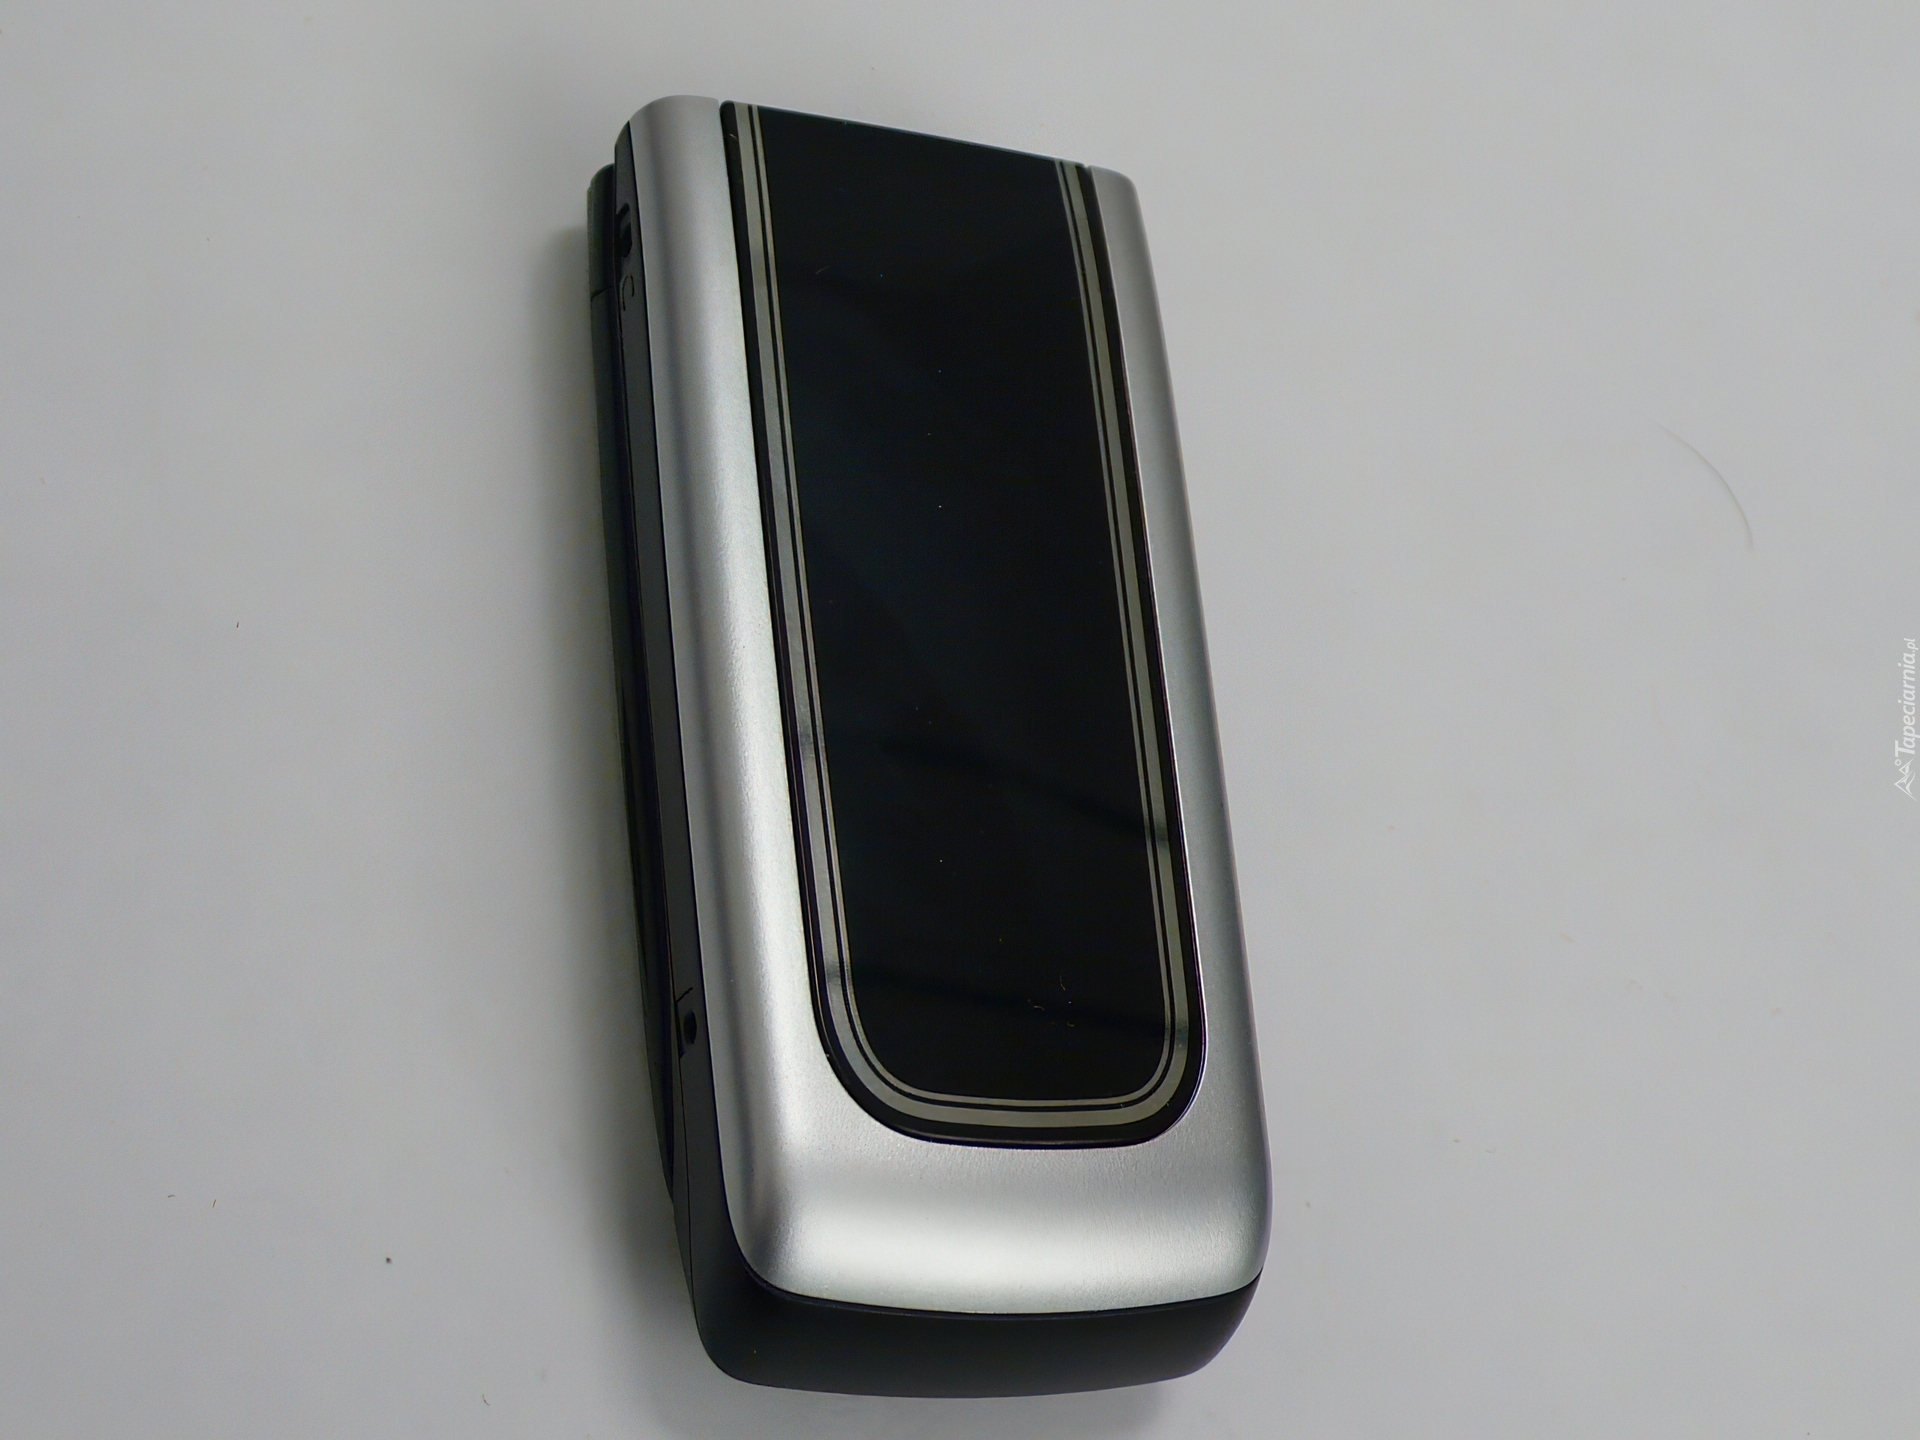 Nokia 6555, Obudowa